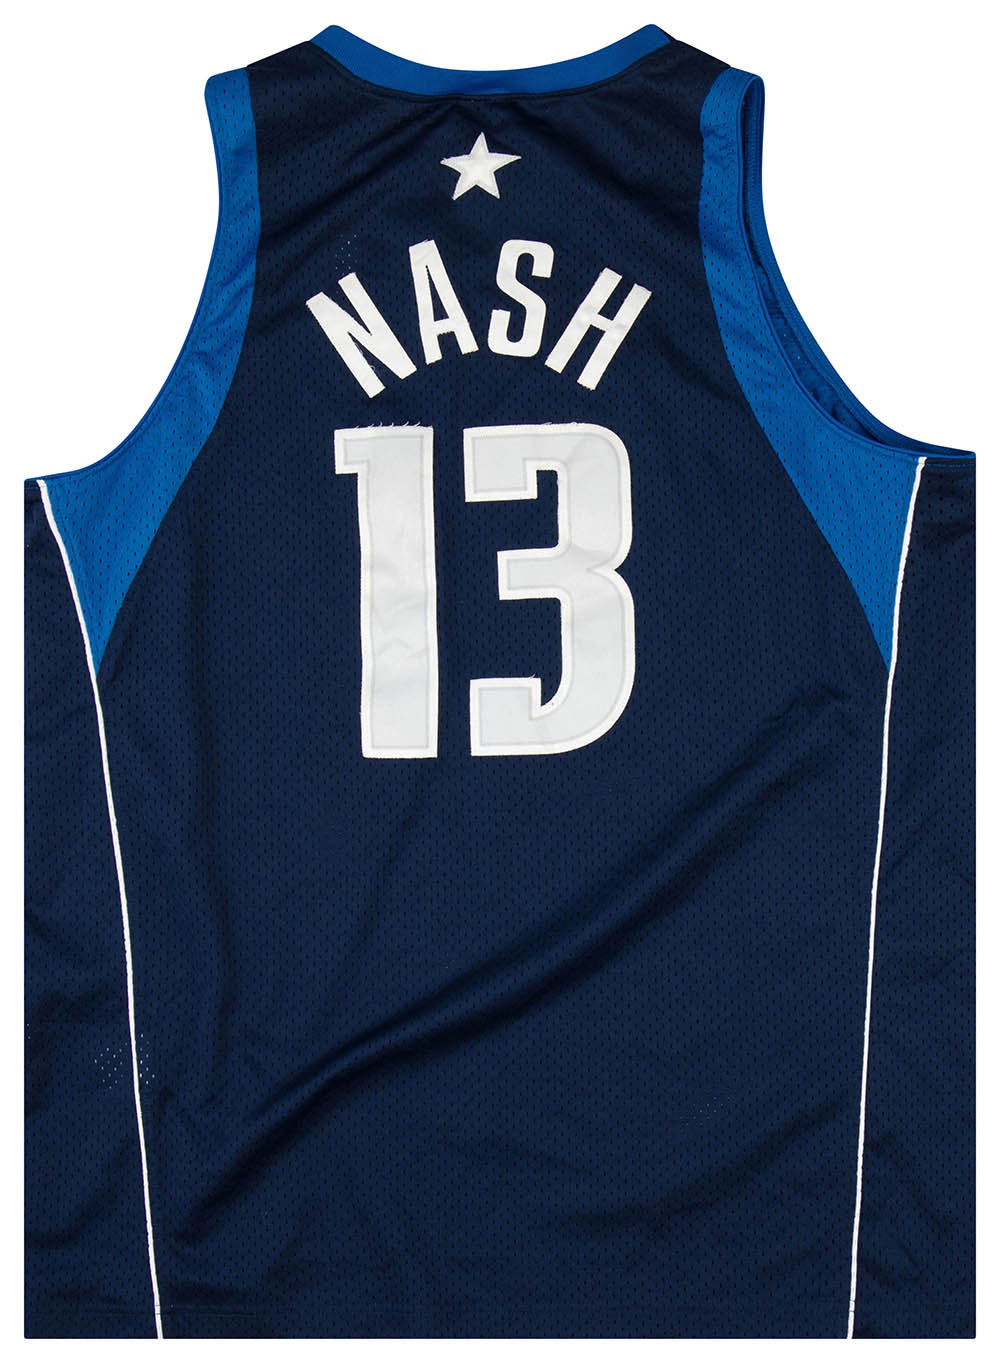 Vintage Steve Nash Dallas Mavericks Champion Basketball Jersey